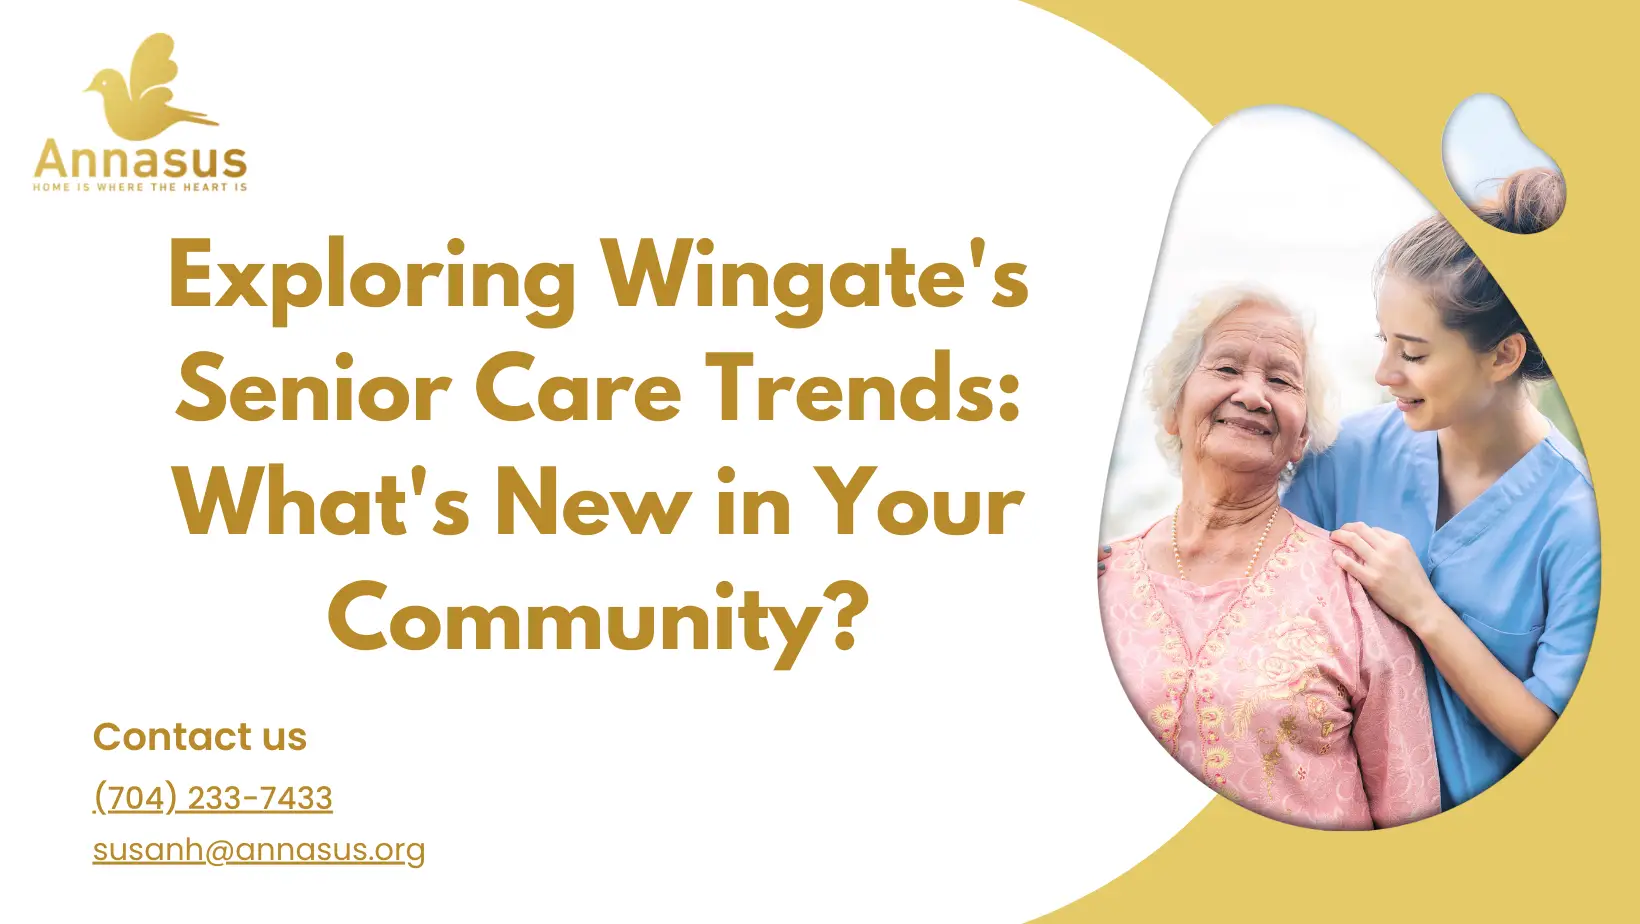 Wingate's Senior Care Trends